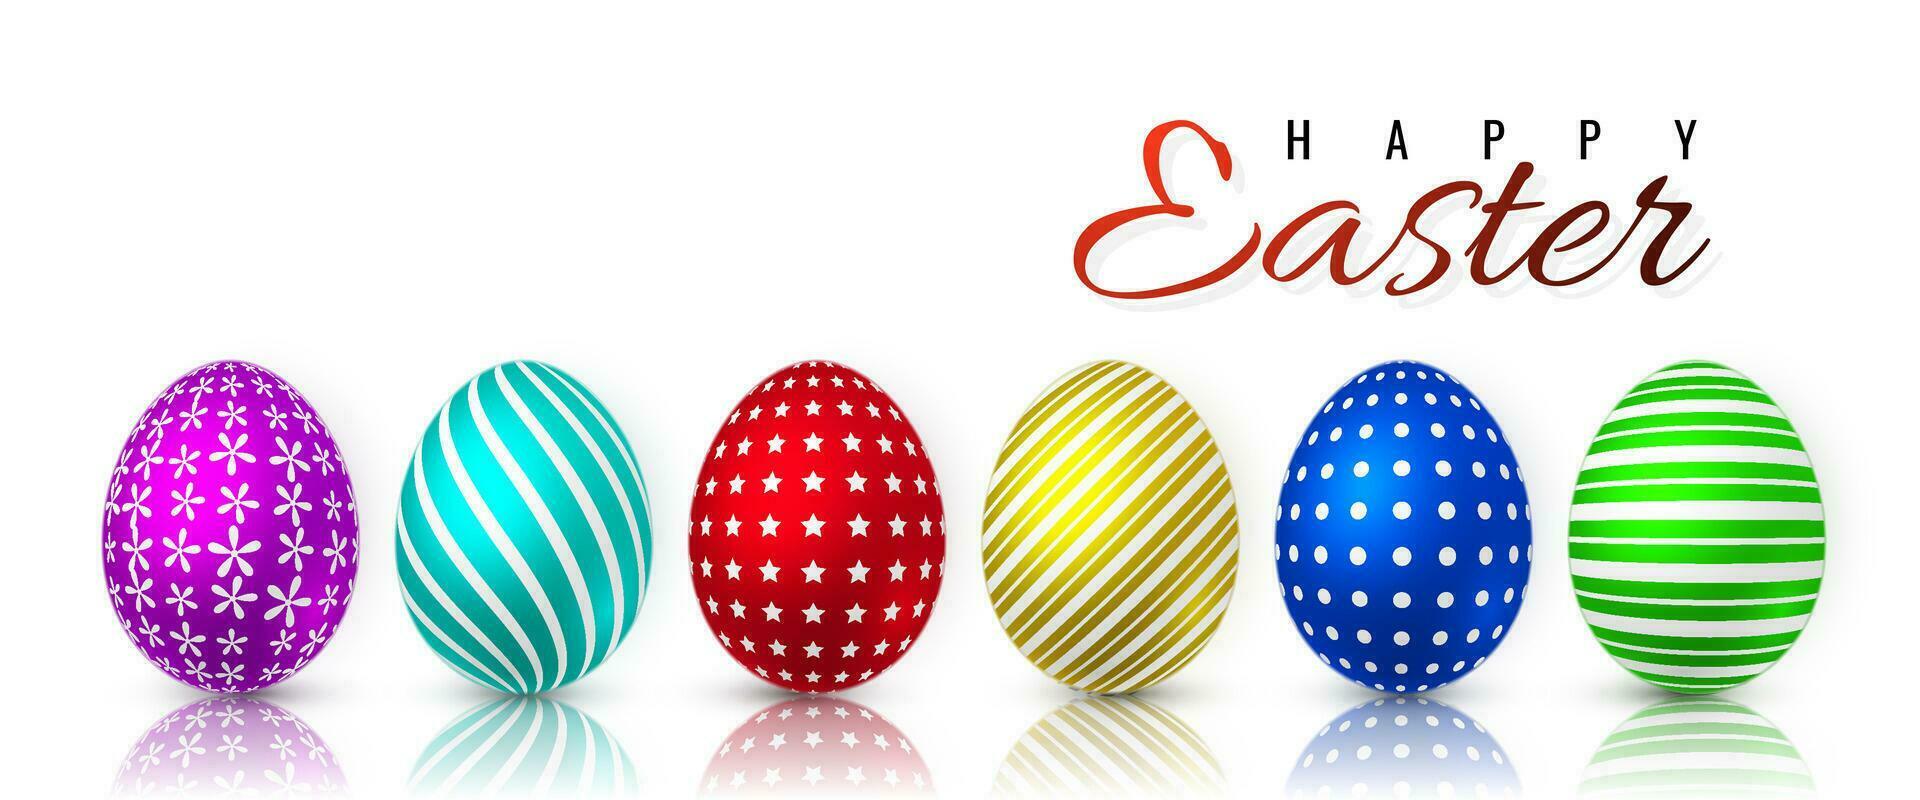 contento Pascua de Resurrección. color Pascua de Resurrección huevos en blanco antecedentes. vector ilustración